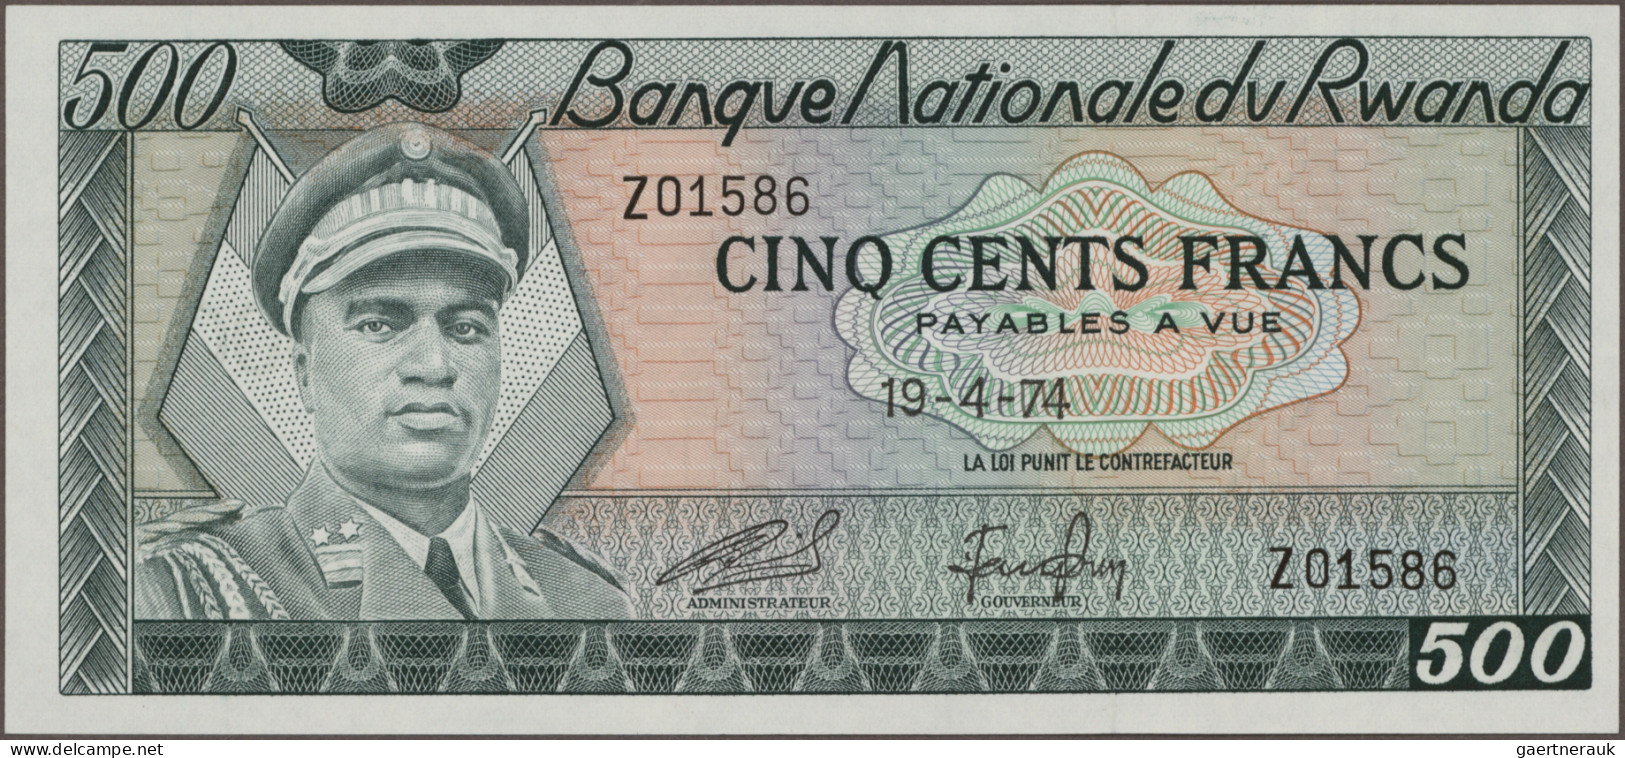 Rwanda: Banque Nationale Du Rwanda, Huge Lot With 26 Banknotes, Series 1964-2009 - Rwanda